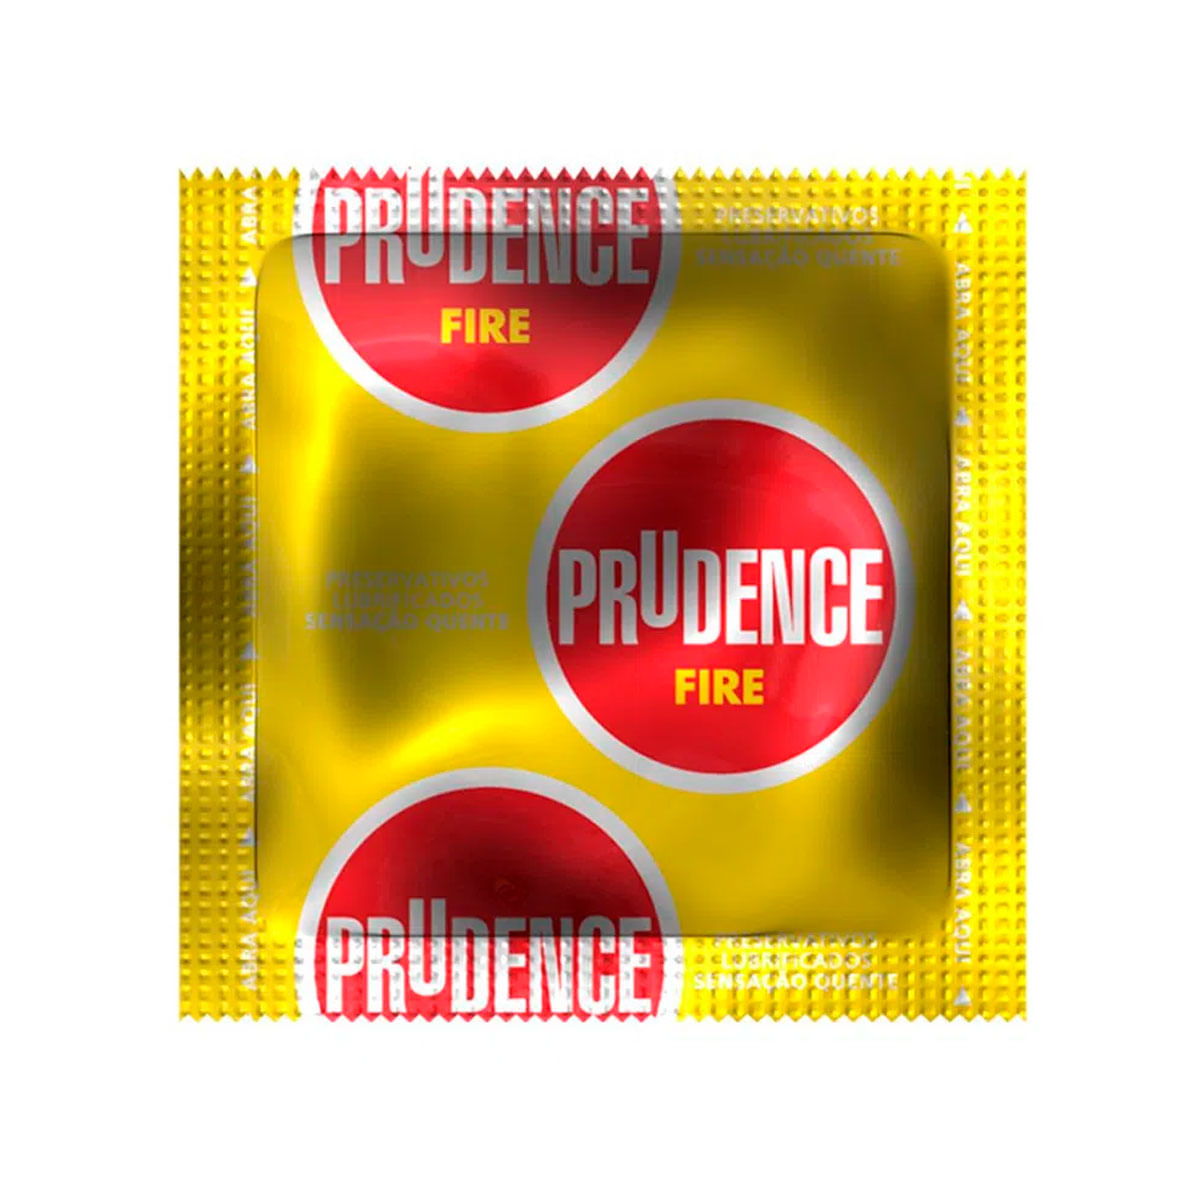 Preservativos Fire Prudence